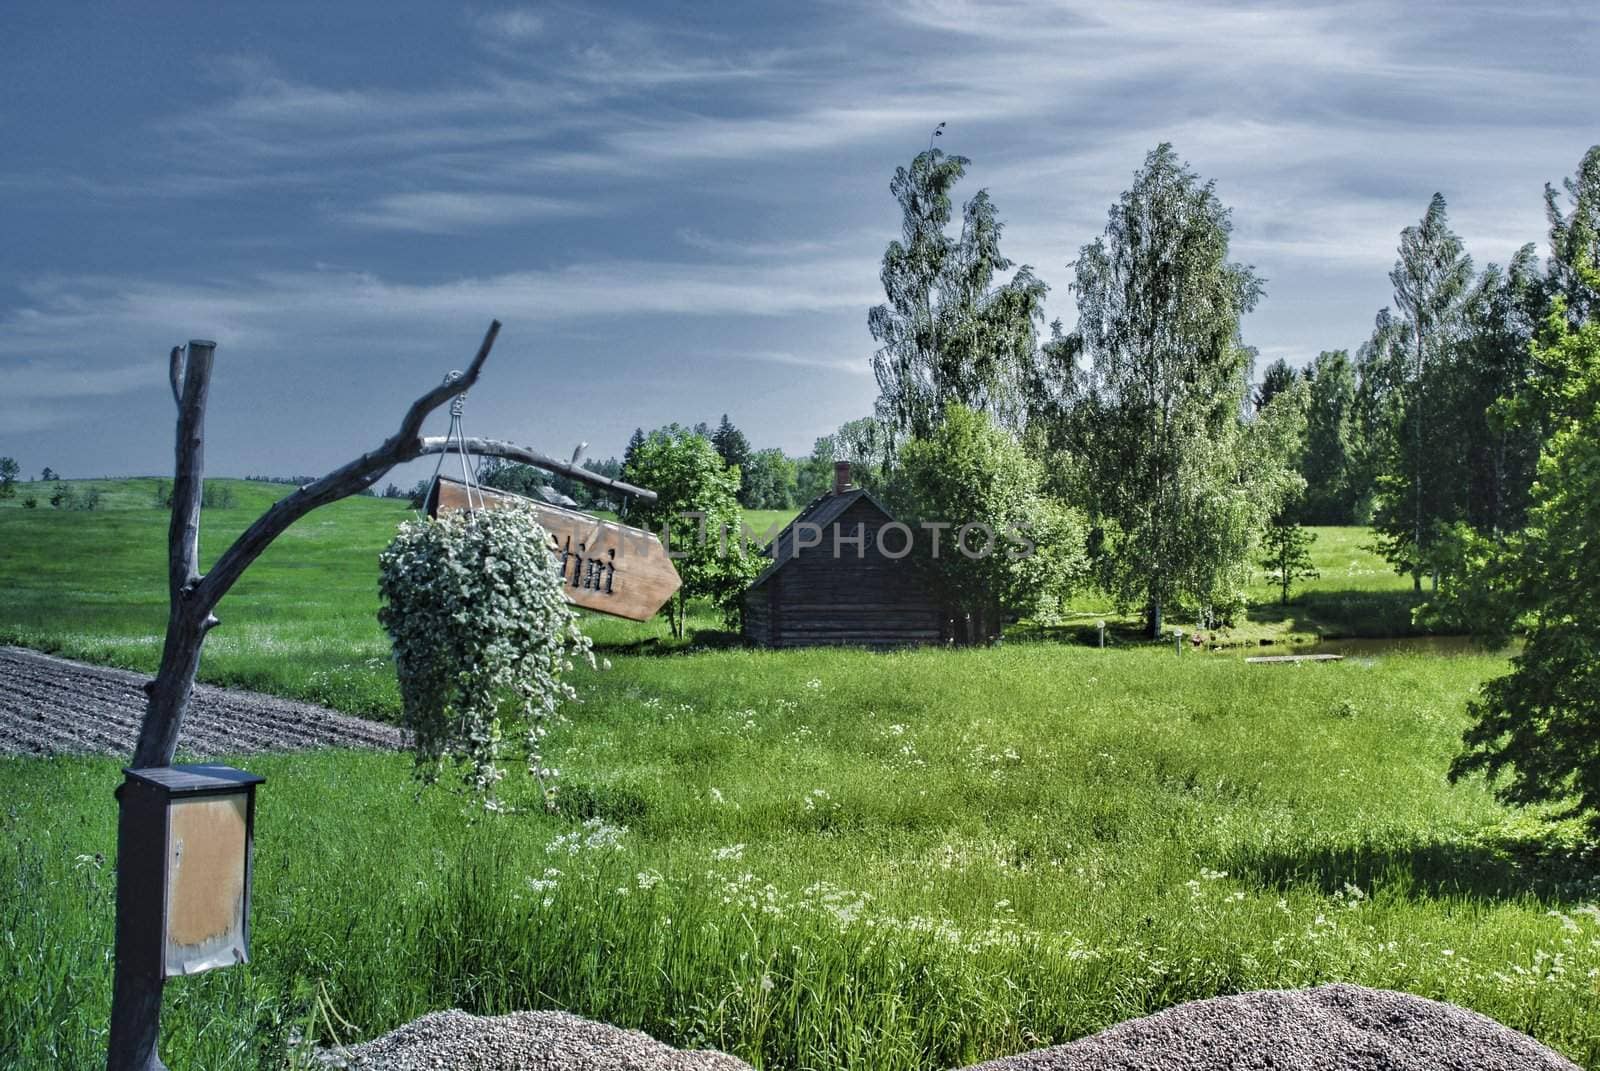 Rural view - village, field, trees, grass